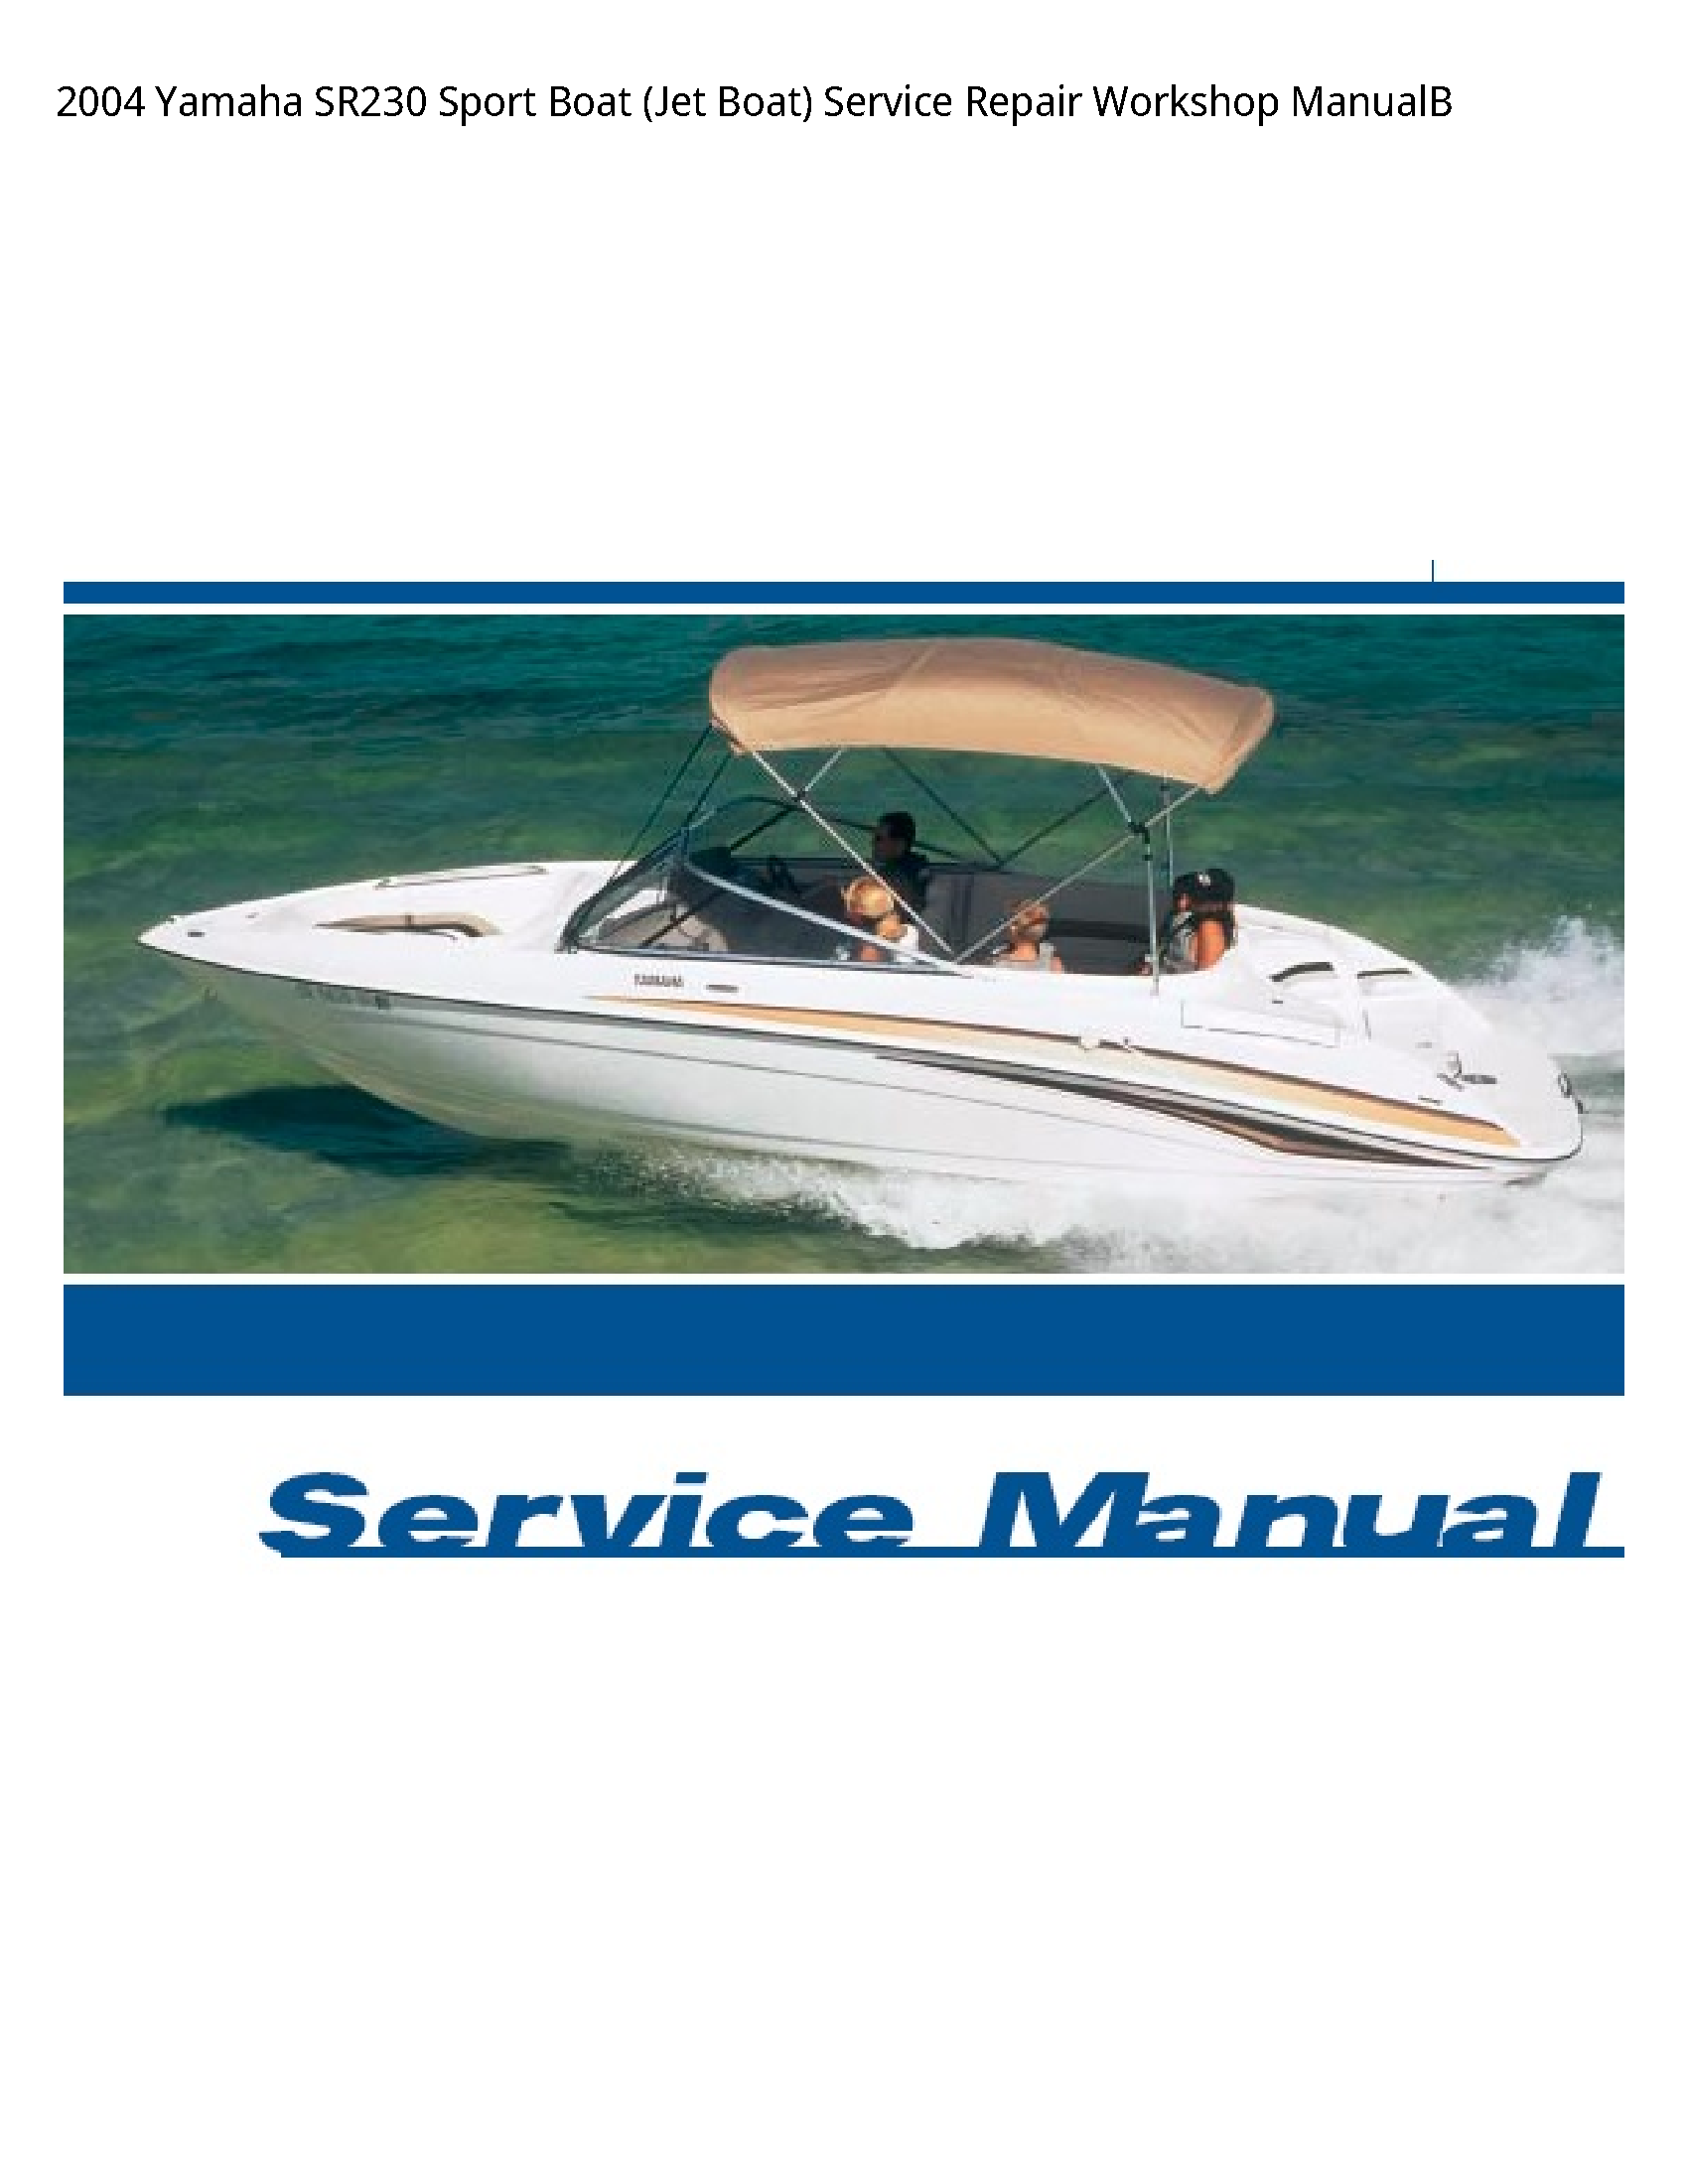 Yamaha SR230 Sport Boat (Jet Boat) manual